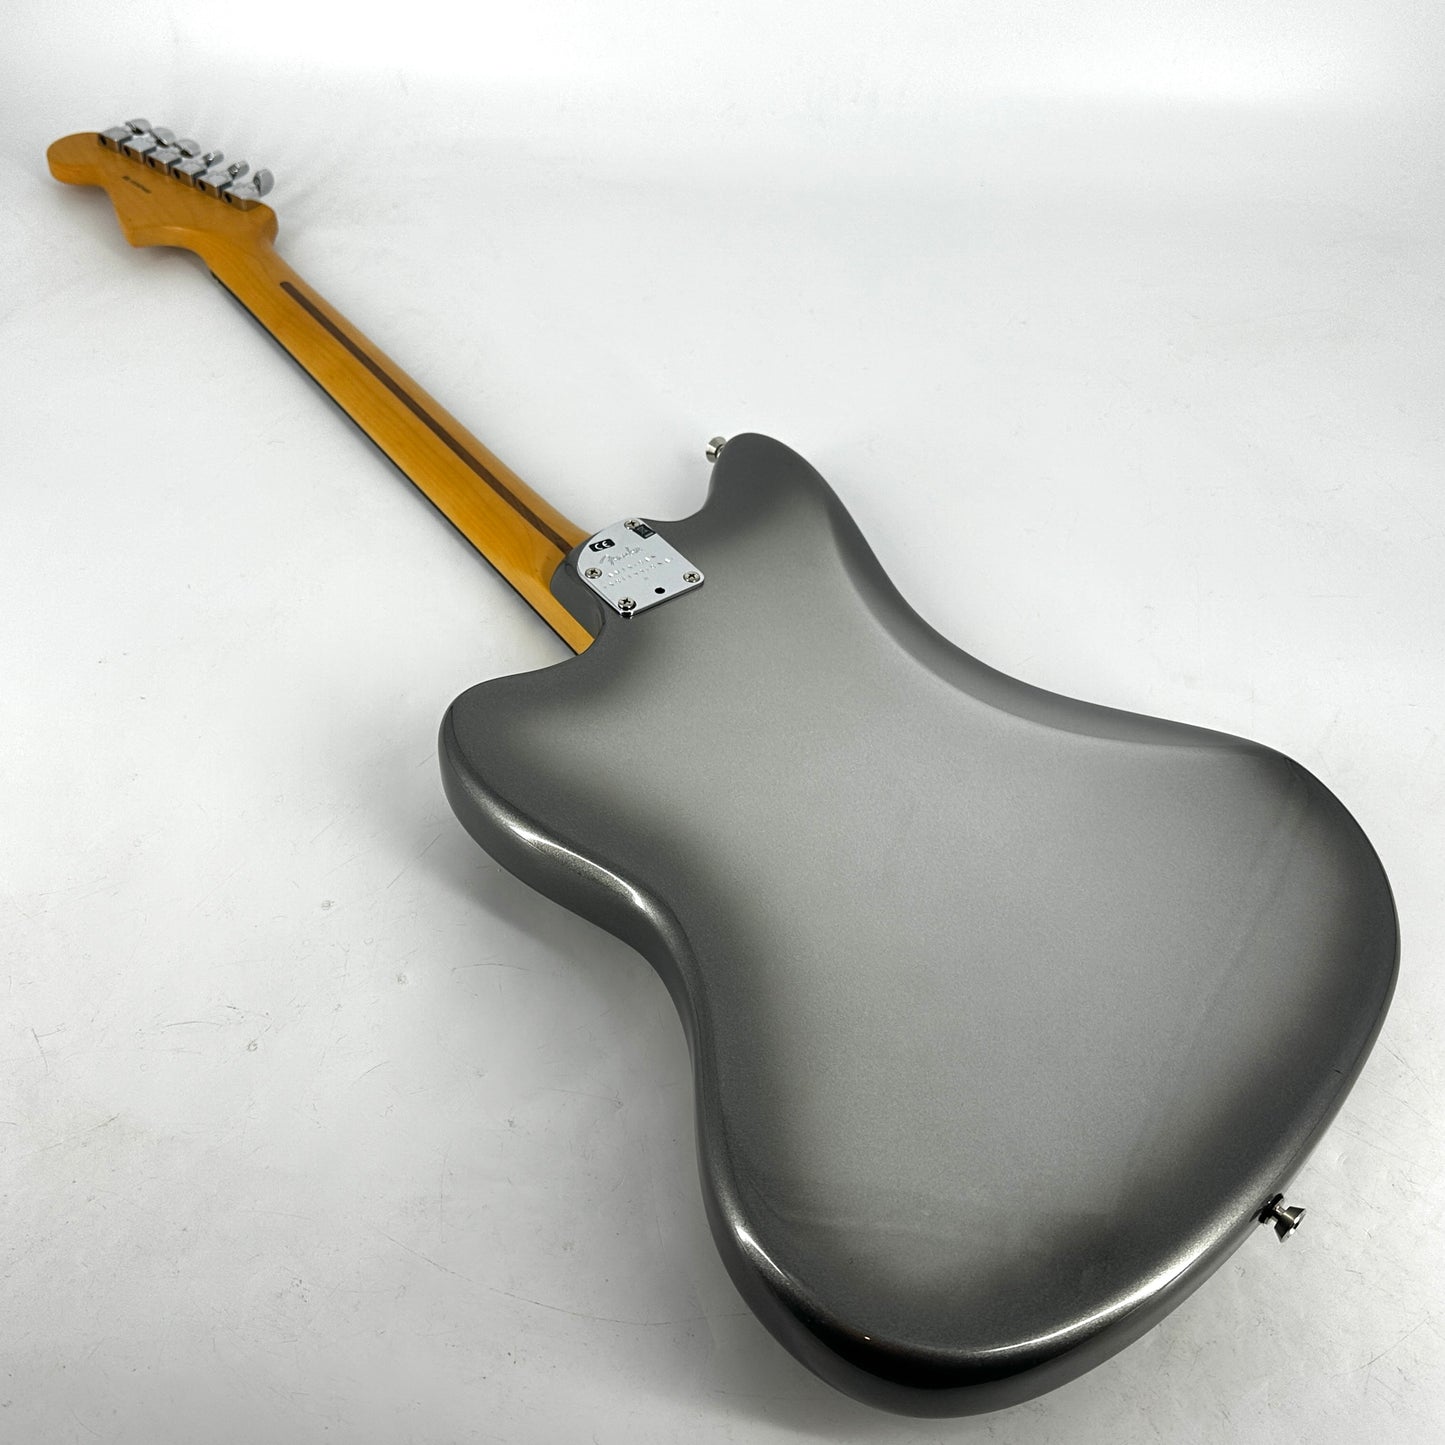 2020 Fender American Professional II Jazzmaster - Mercury Silver